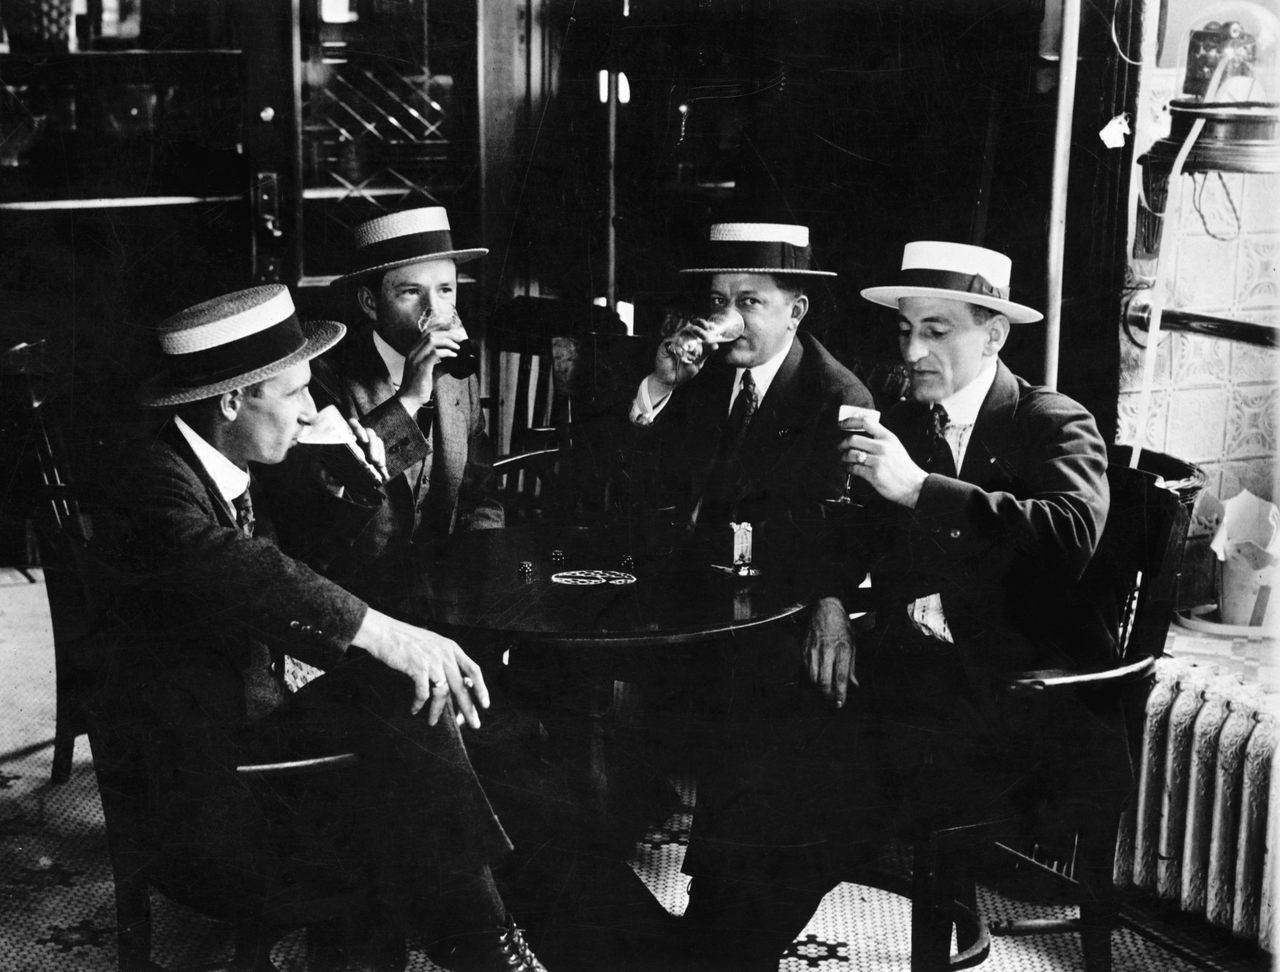 Four men in boater hats enjoy a last drink together before Prohibition begins in 1919.